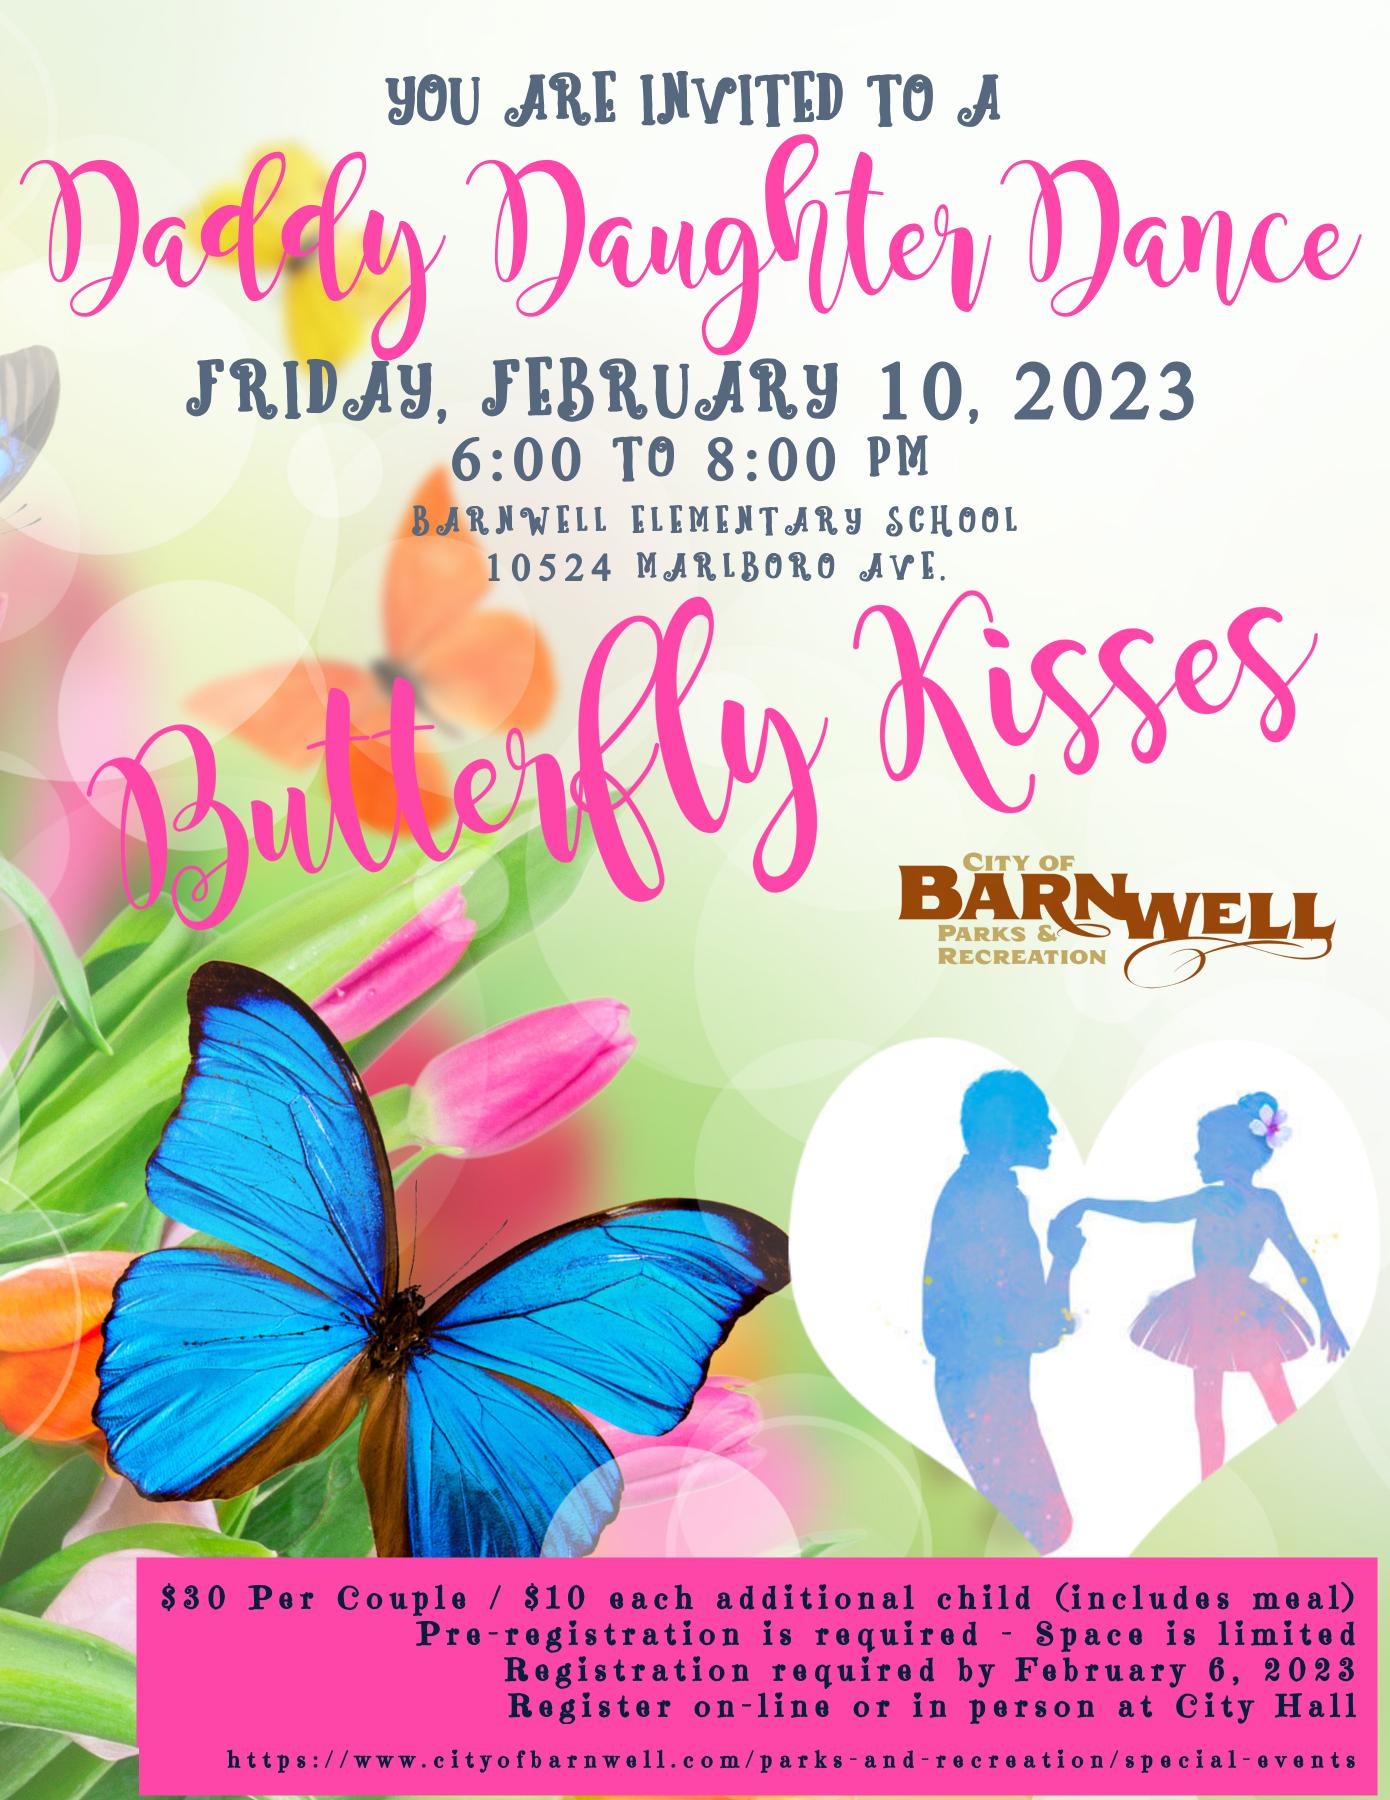 Daddy Daughter Dance Flyer